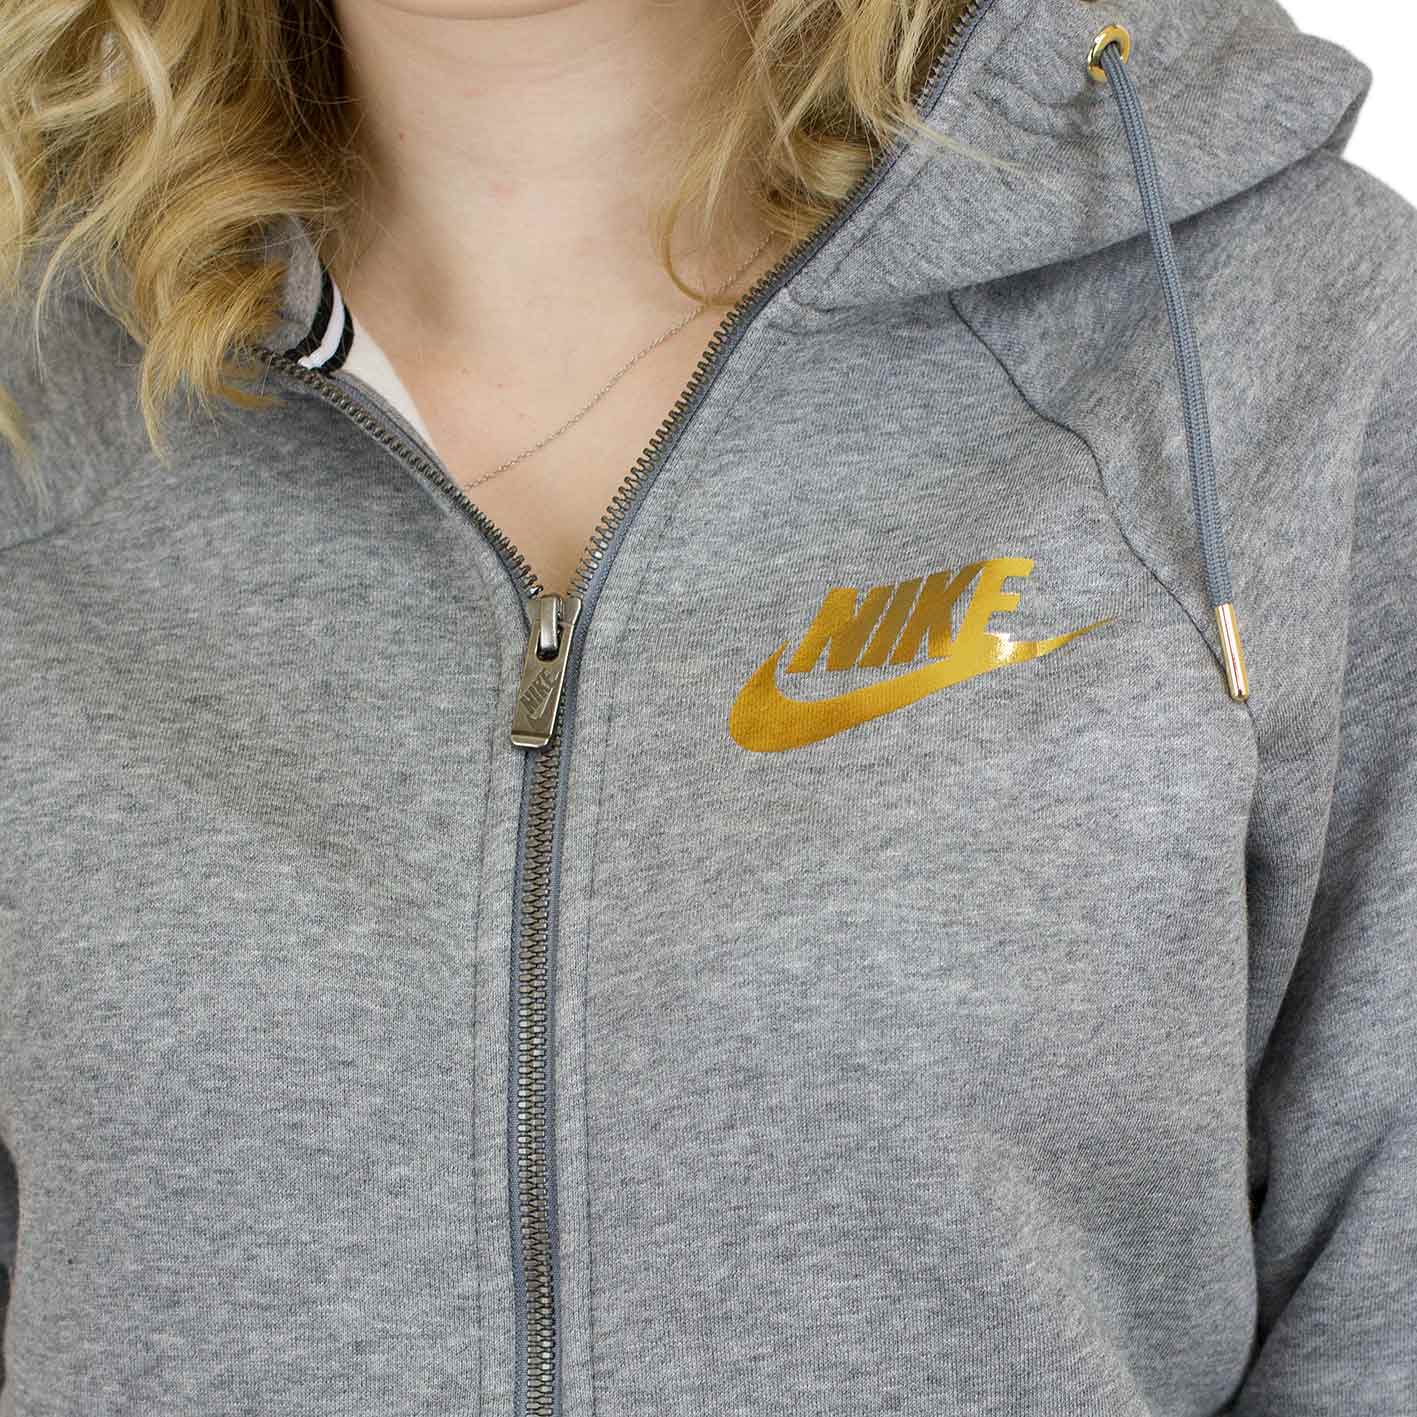 ☆ Nike Damen Zip-Hoody Rally grau/gold - hier bestellen!